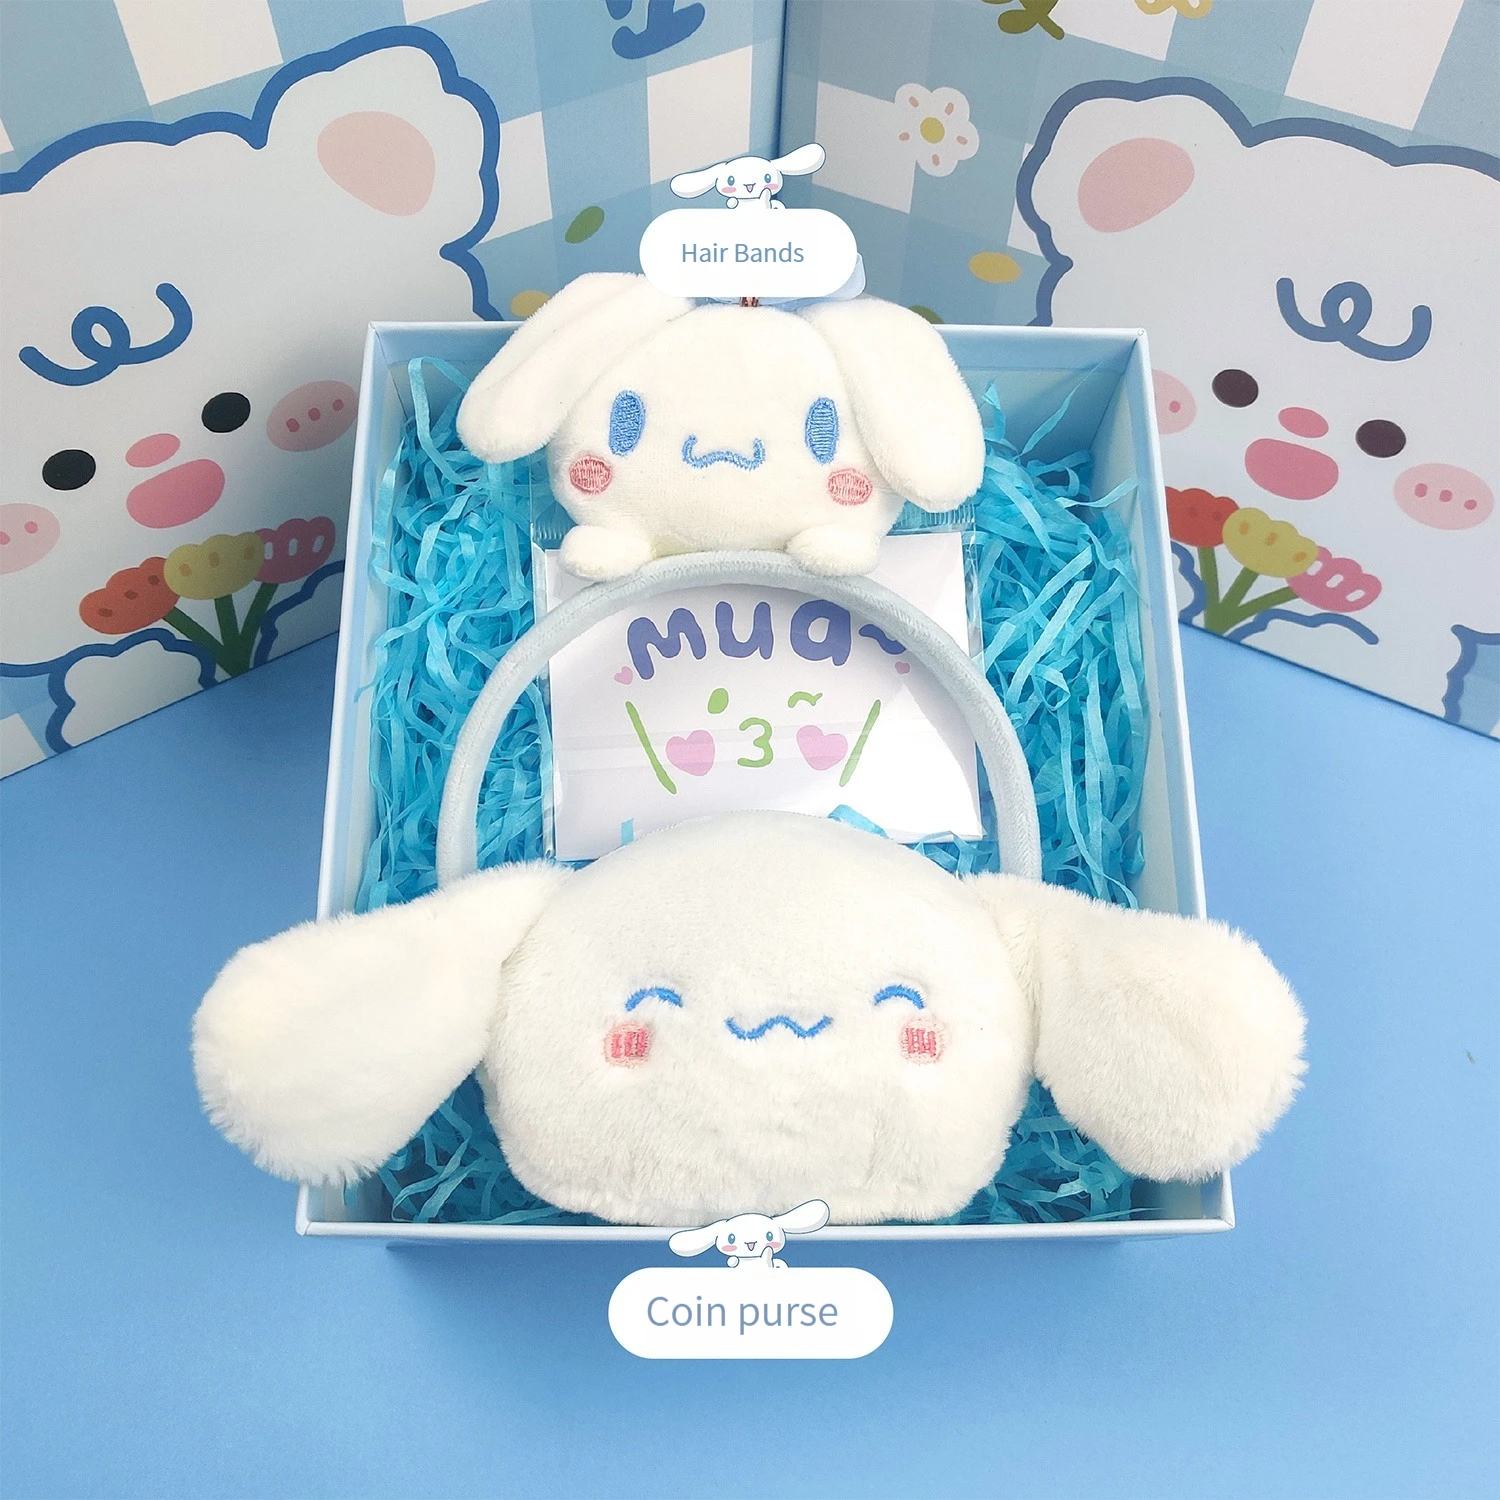 Sanrio Cinnamoroll gift set birthday gift box send girlfriend Christmas  Souvenir child student lovers Gift cute Cartoon kawaii